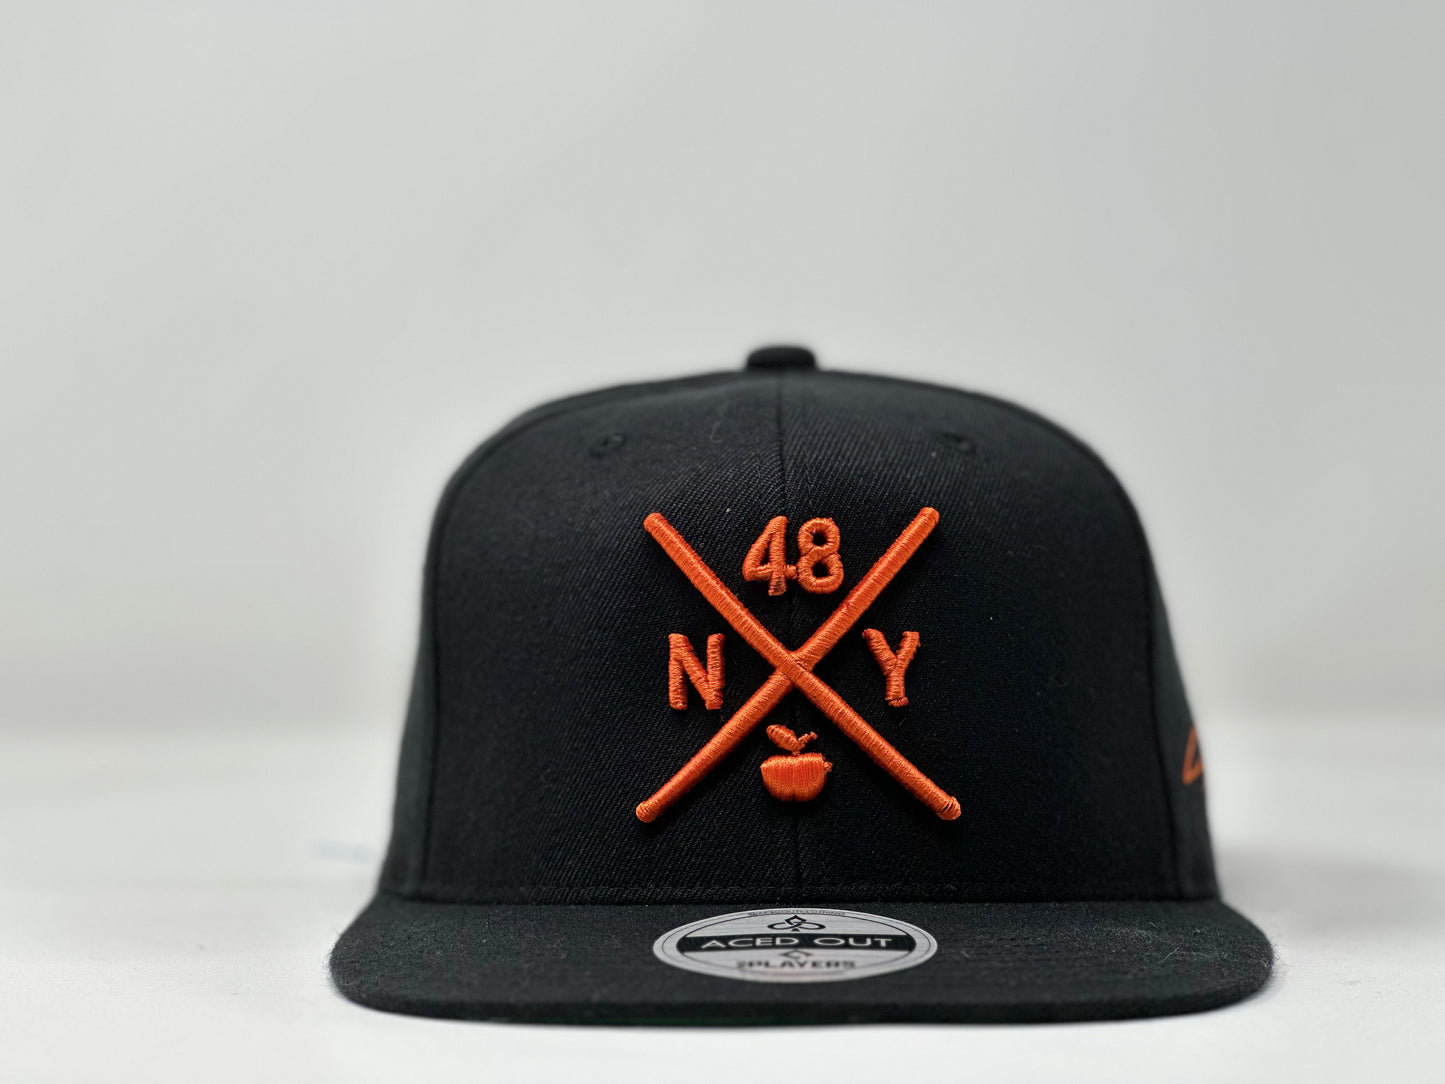 Jacob deGrom Compass Hat - Black Snapback/Orange Embroidery